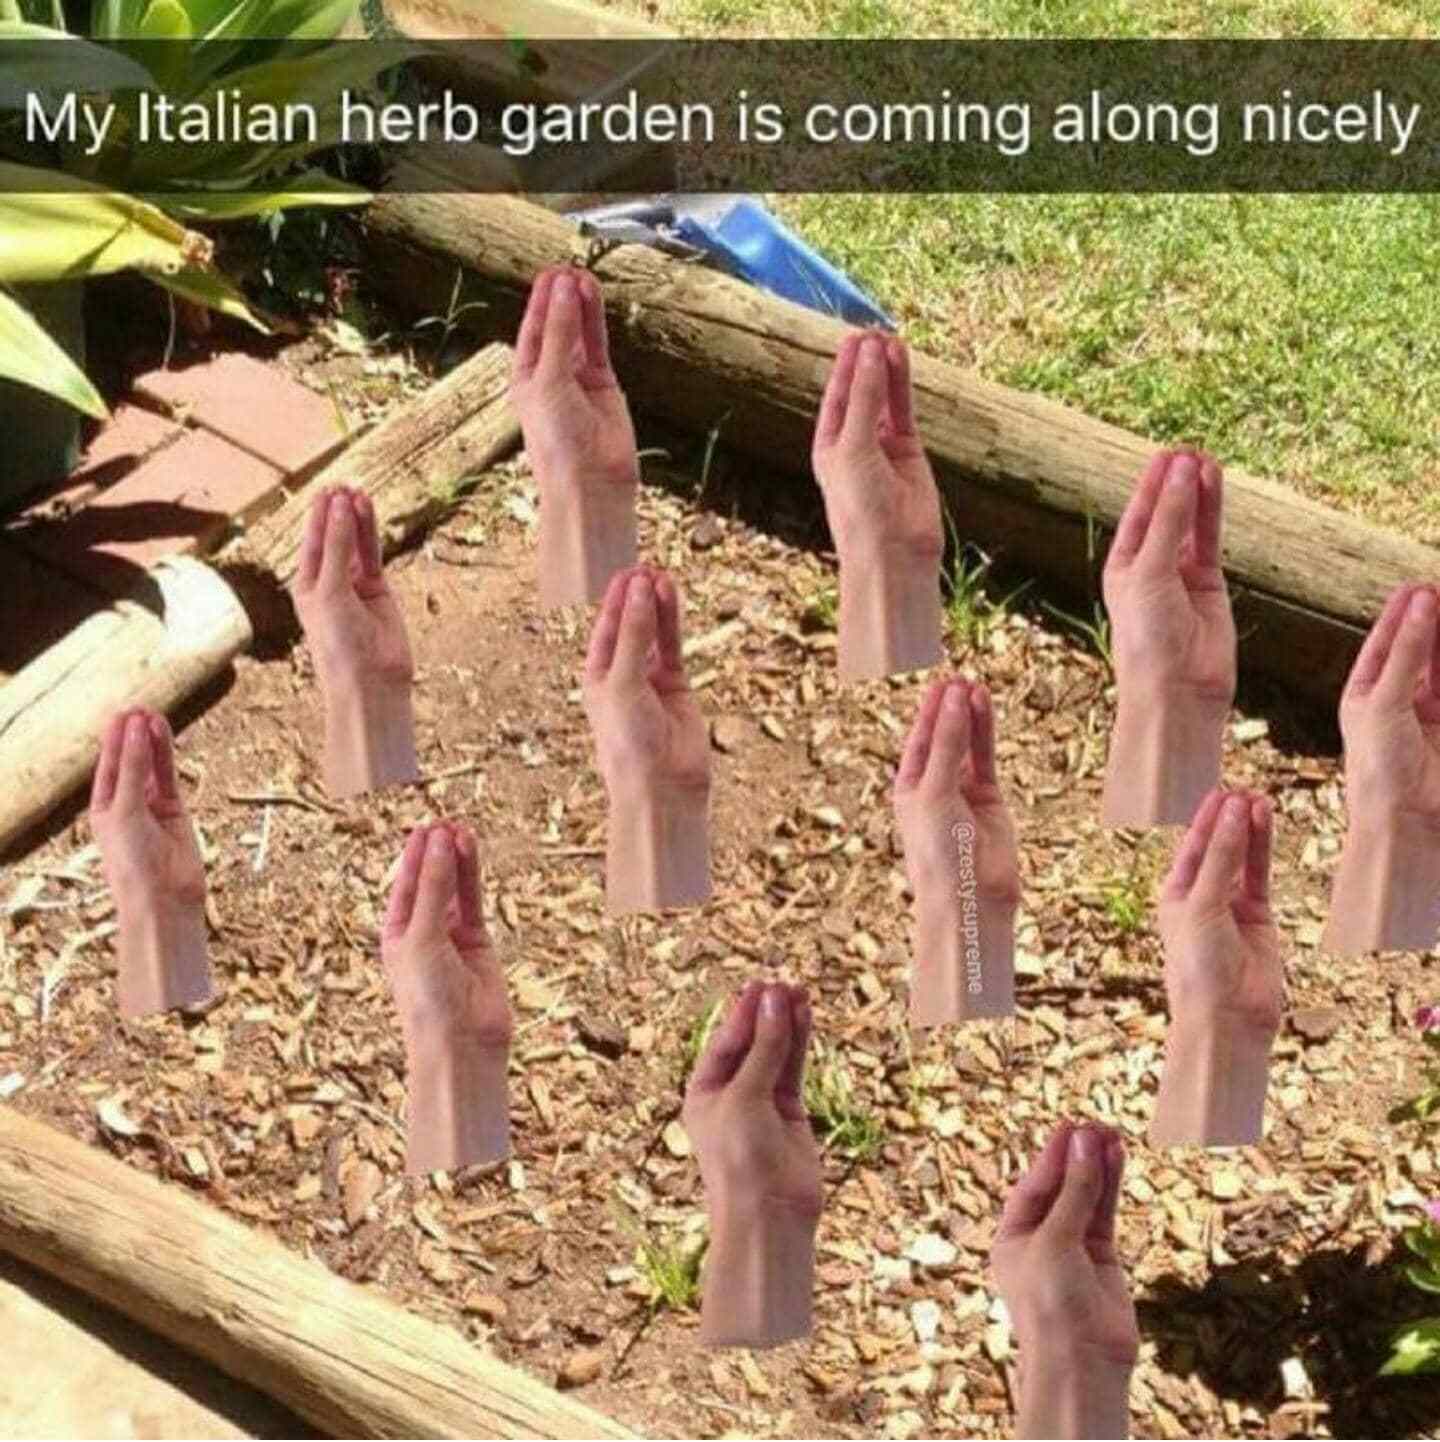 italian herb garden meme - My Italian herb garden is coming along nicely